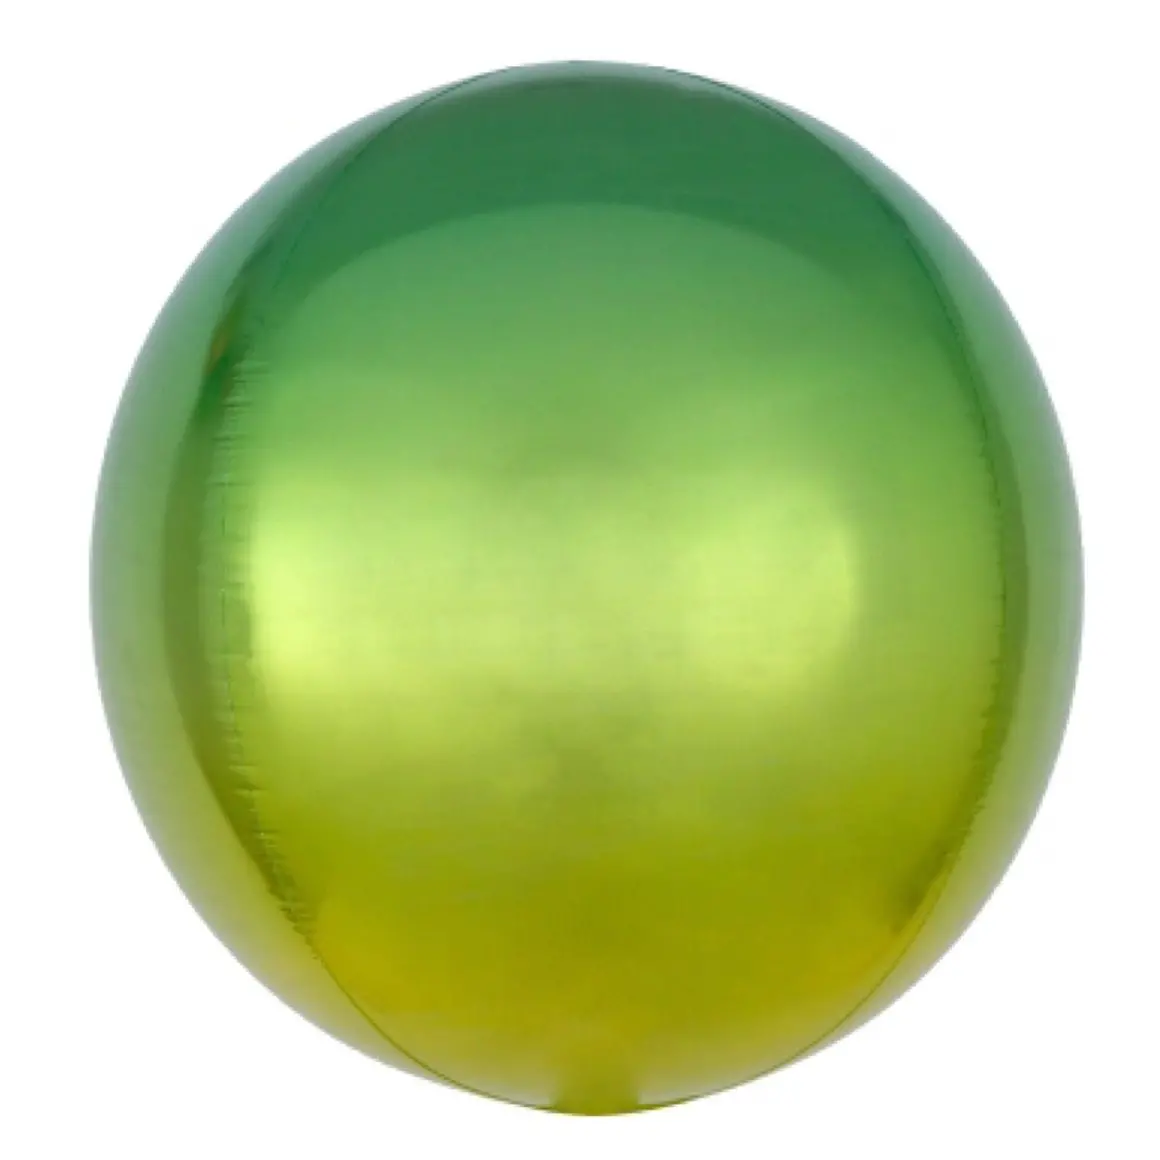 ORBZ sphere balloon - Green Yellow